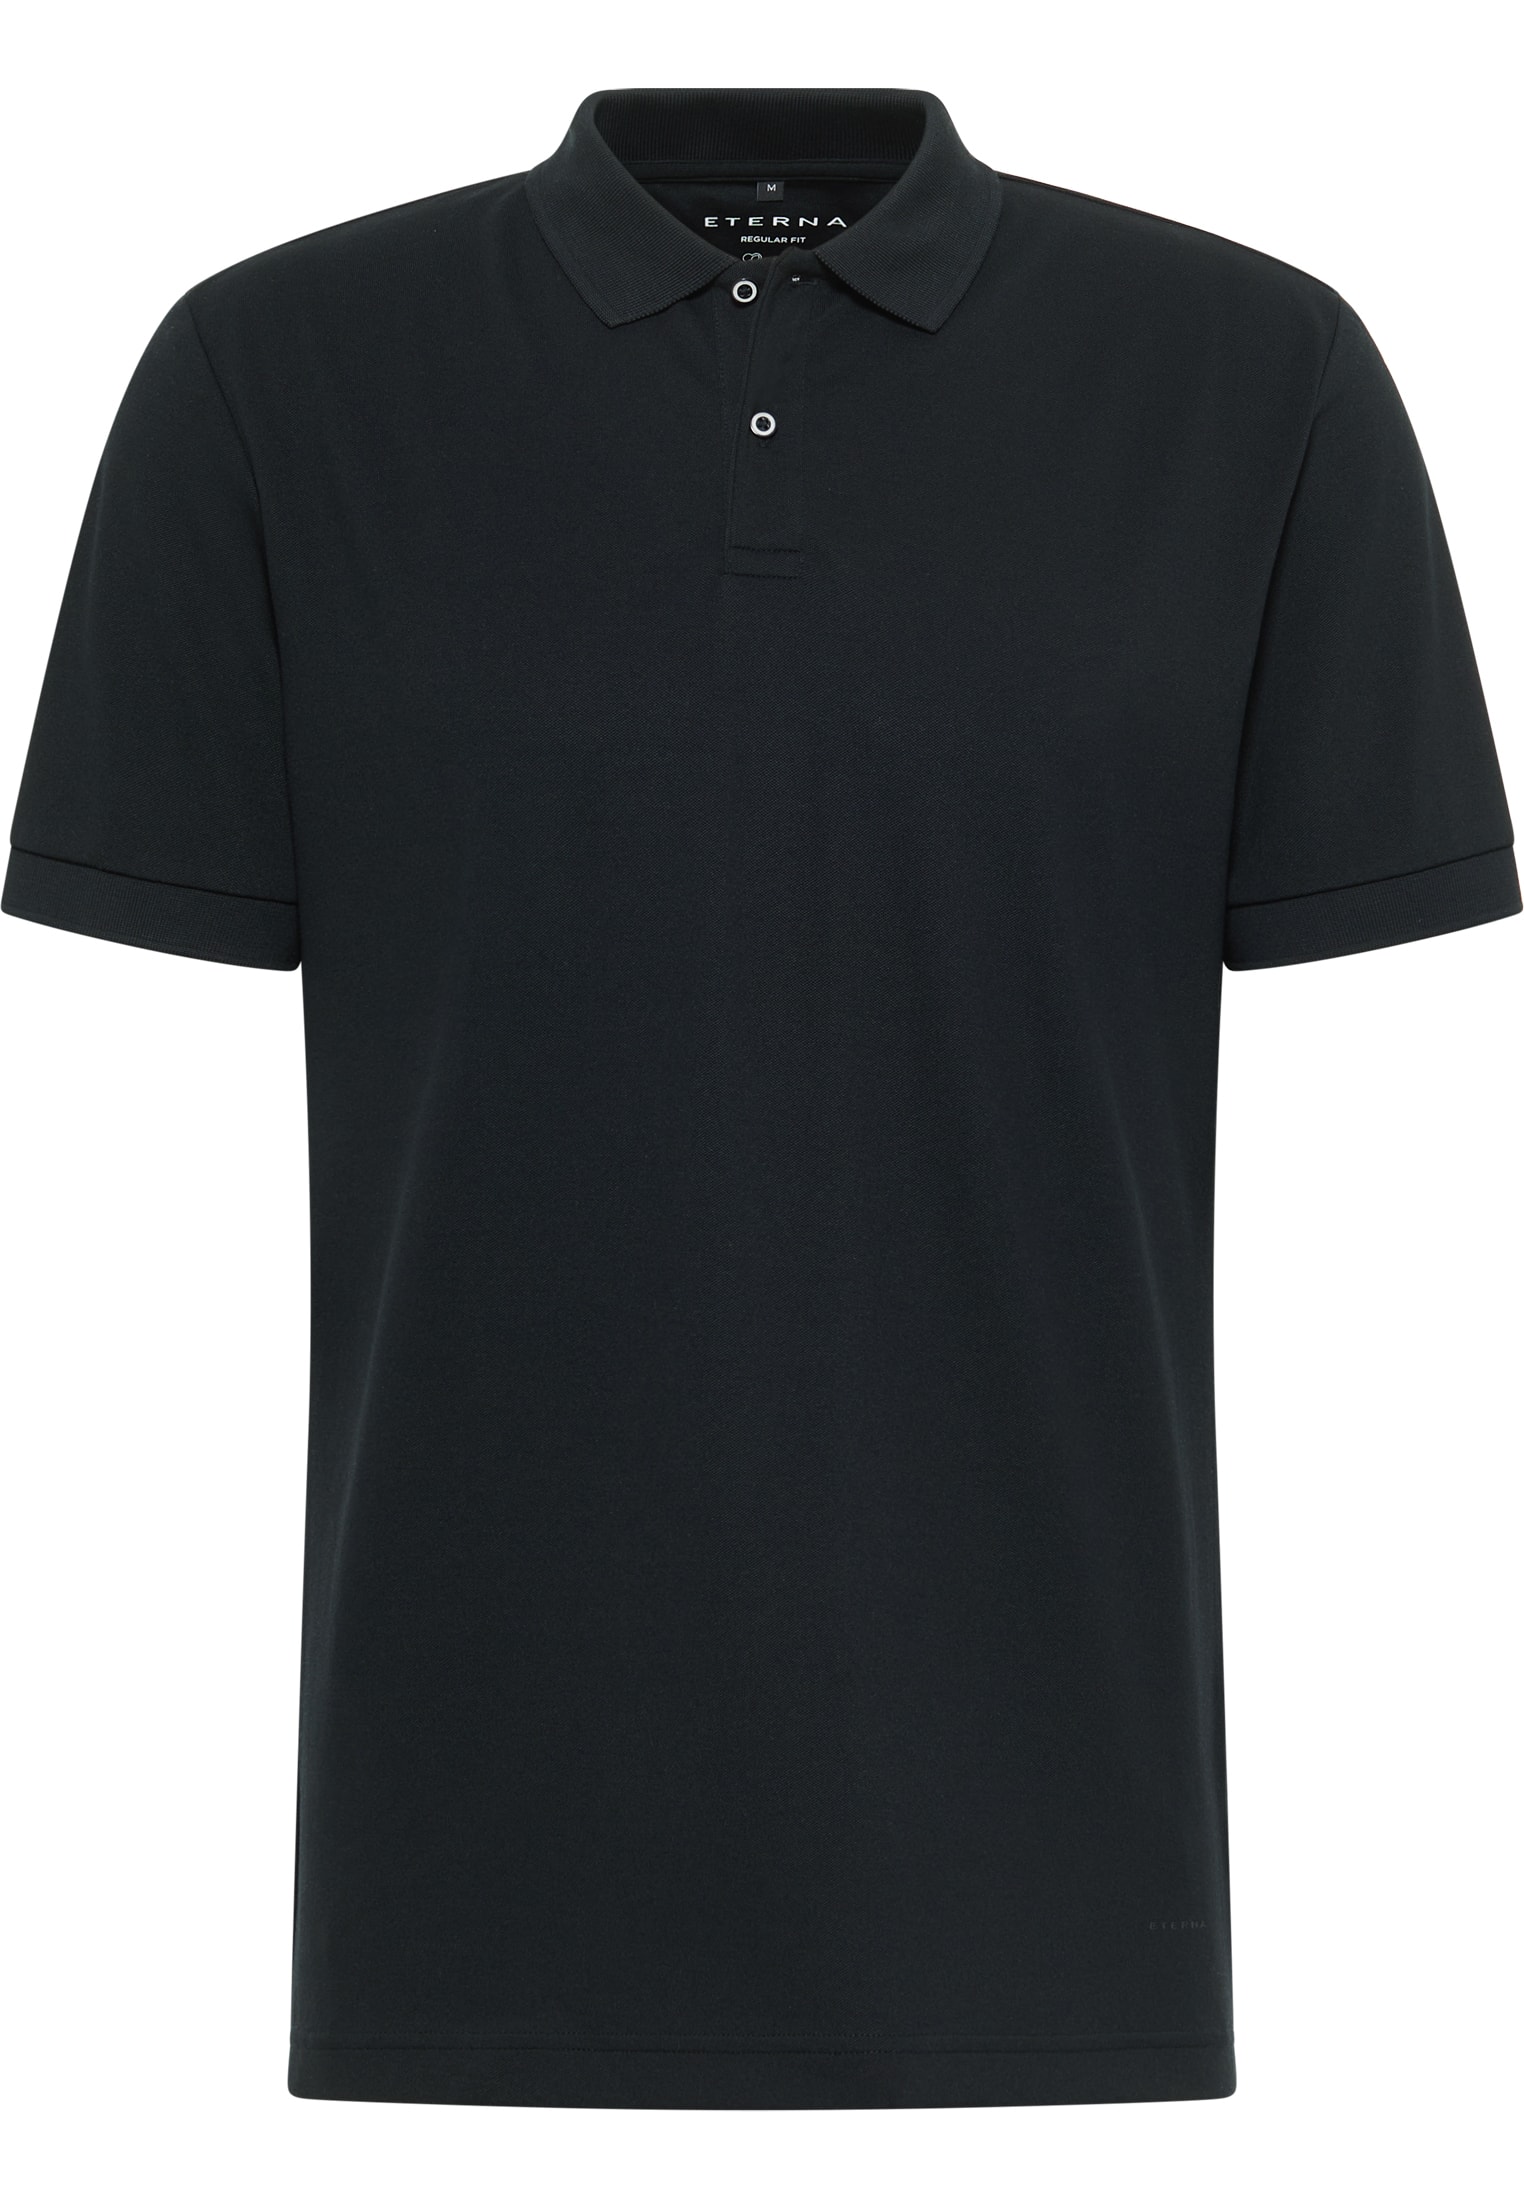 REGULAR FIT Poloshirt in schwarz unifarben